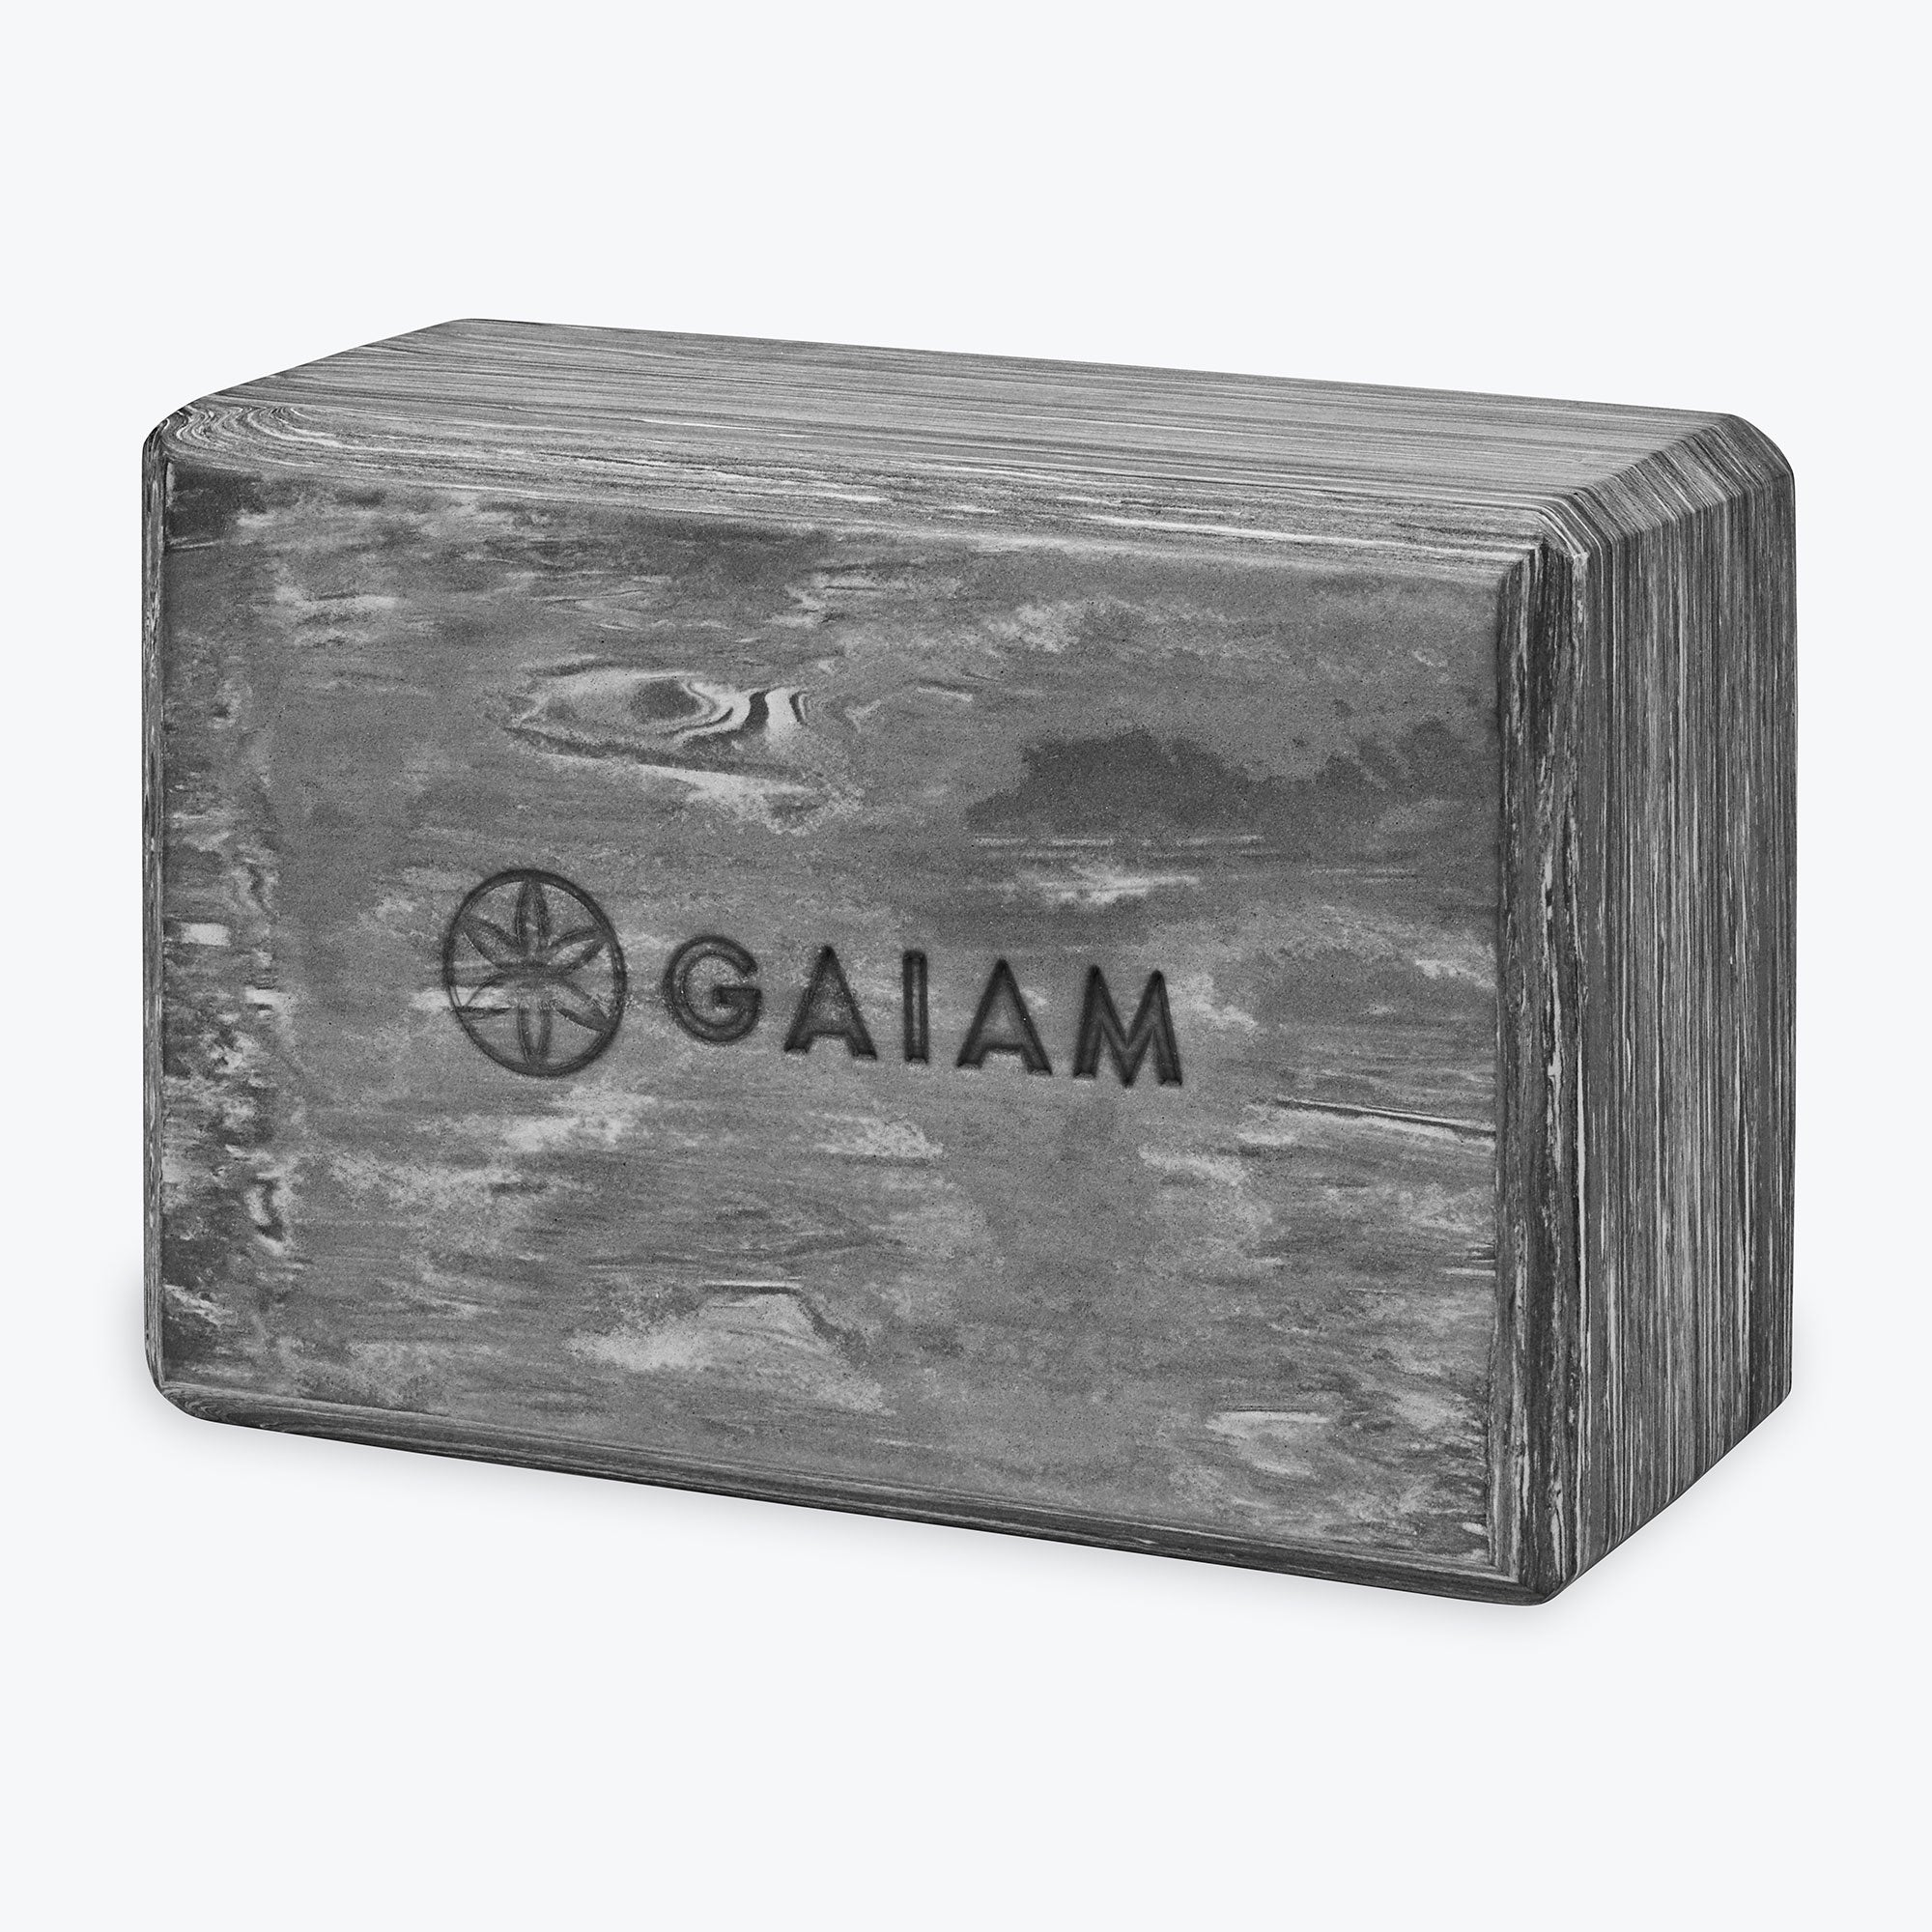 Gaiam Yoga Block - Supportive Latex-Free EVA Foam Soft Non-Slip